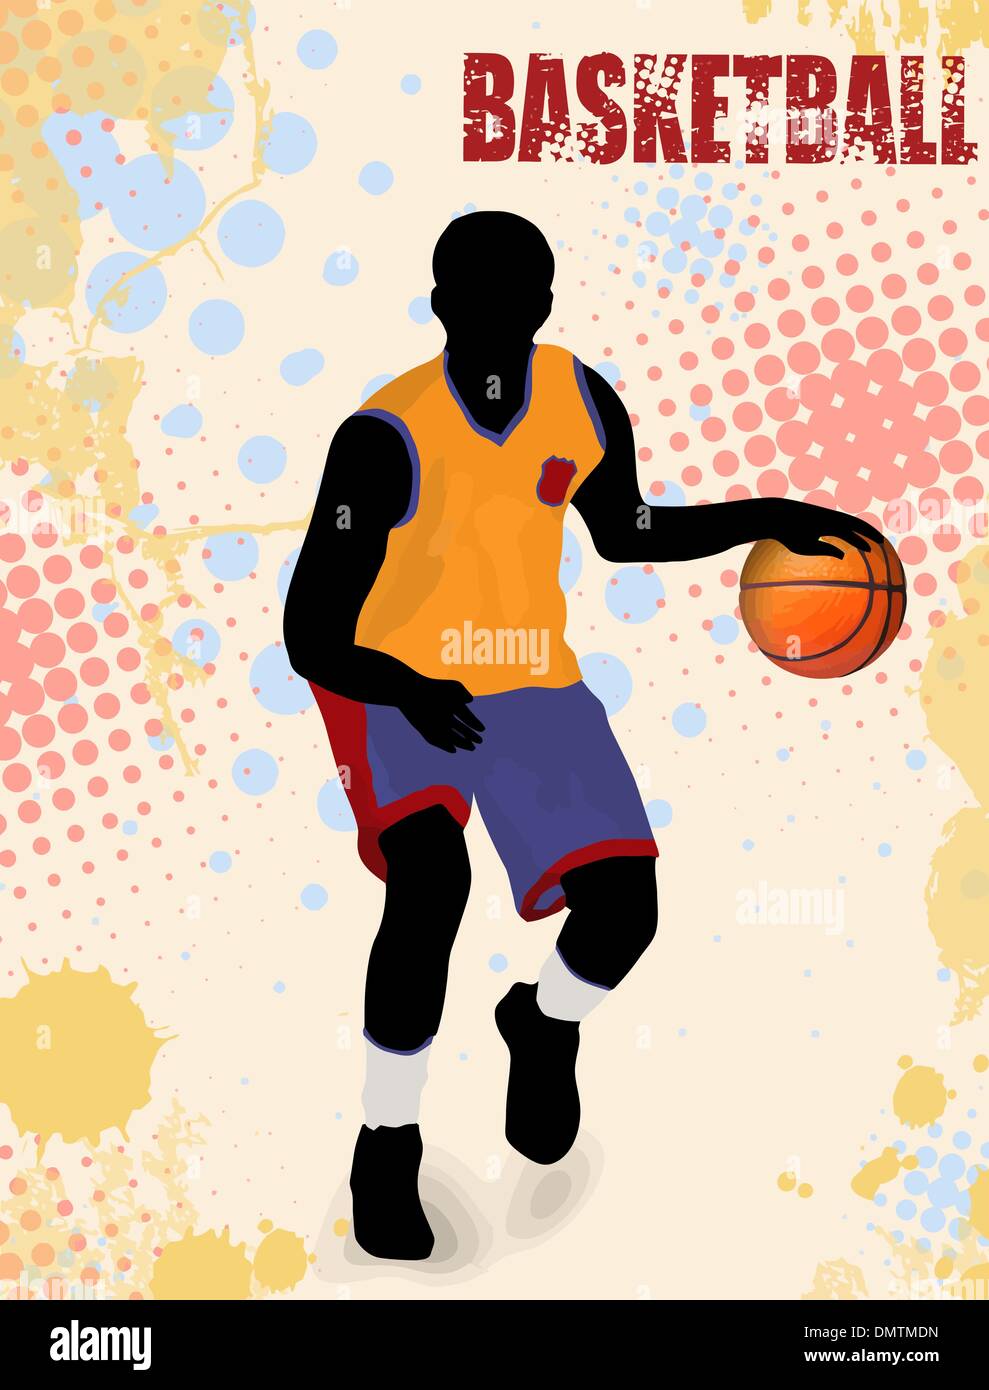 Basketball Nba Tournament Sport Poster Design Banner Pop Art Style Ball  Isolated On Black Background Luxury Vertical Flyer Illustration Stock  Illustration - Download Image Now - iStock